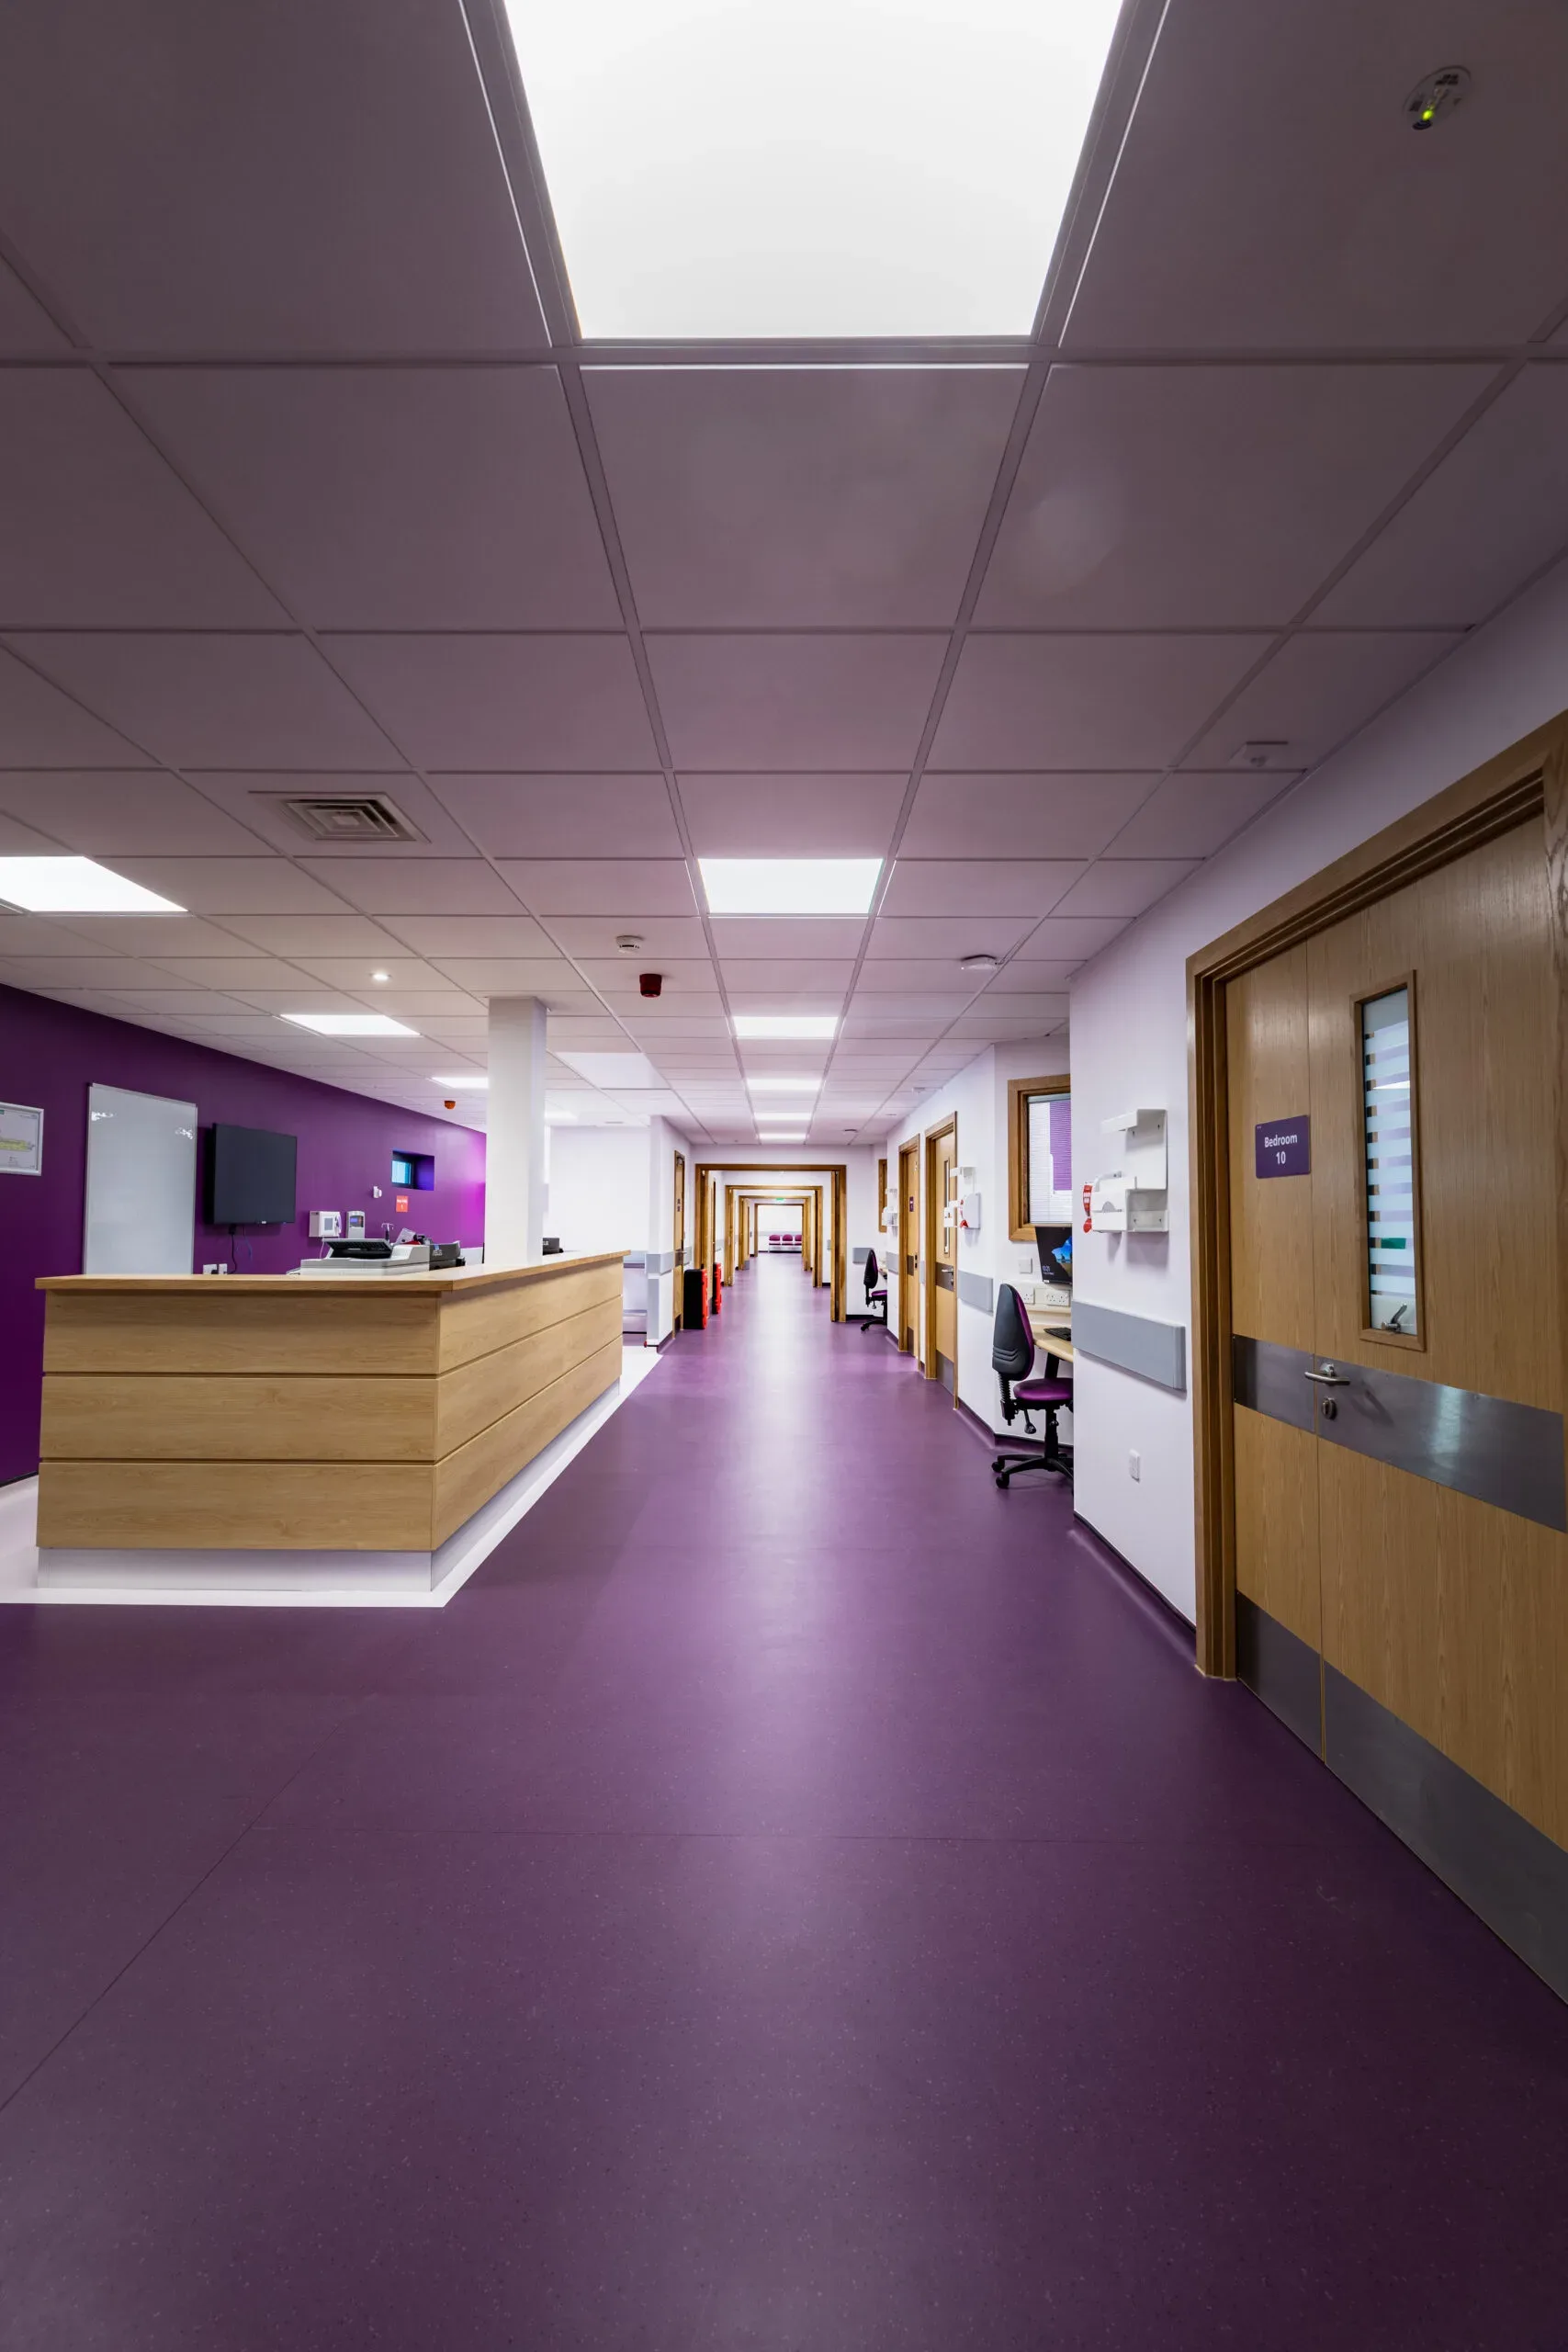 ModuleCo Modular Hospital Ward image showing a long corridor